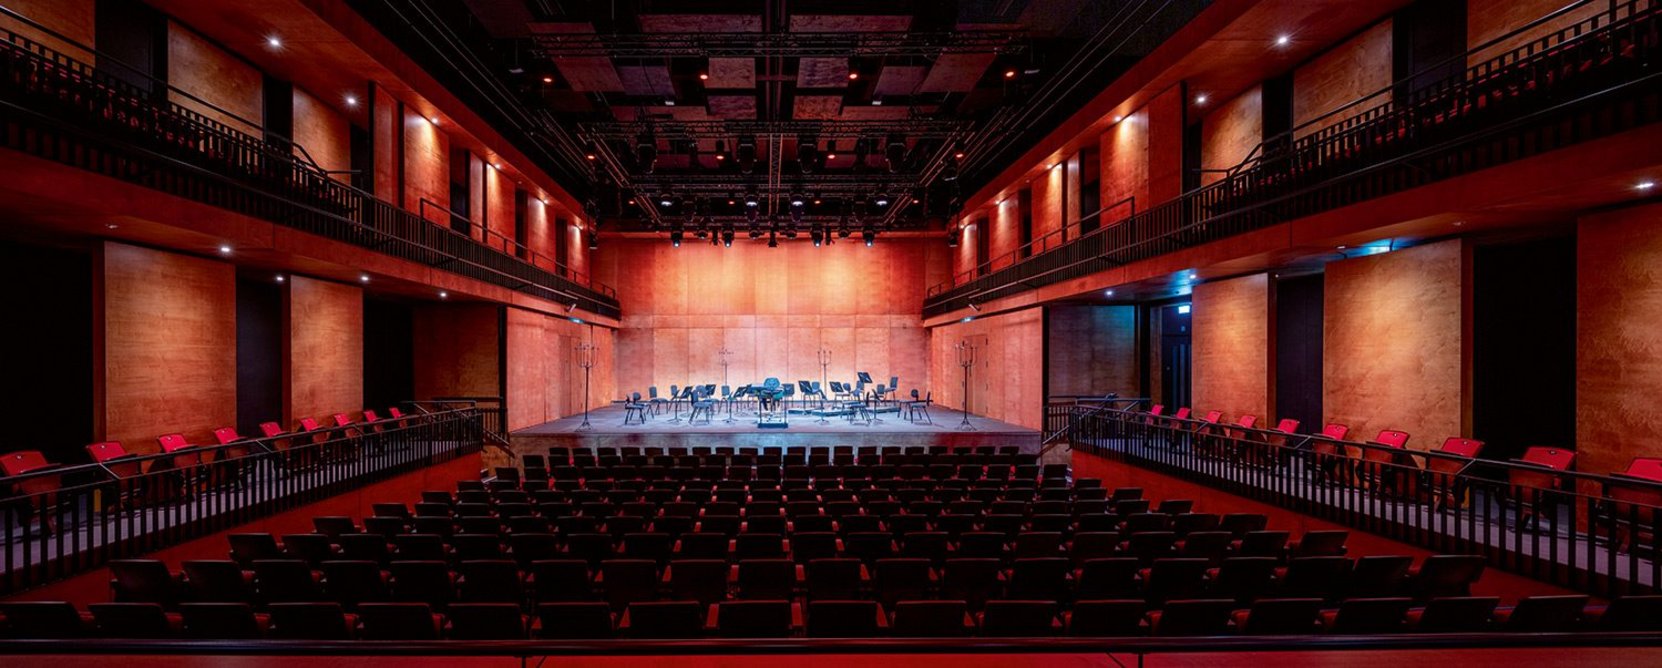 The ‘shoe box’ auditorium is spatially simple but creates good acoustics.